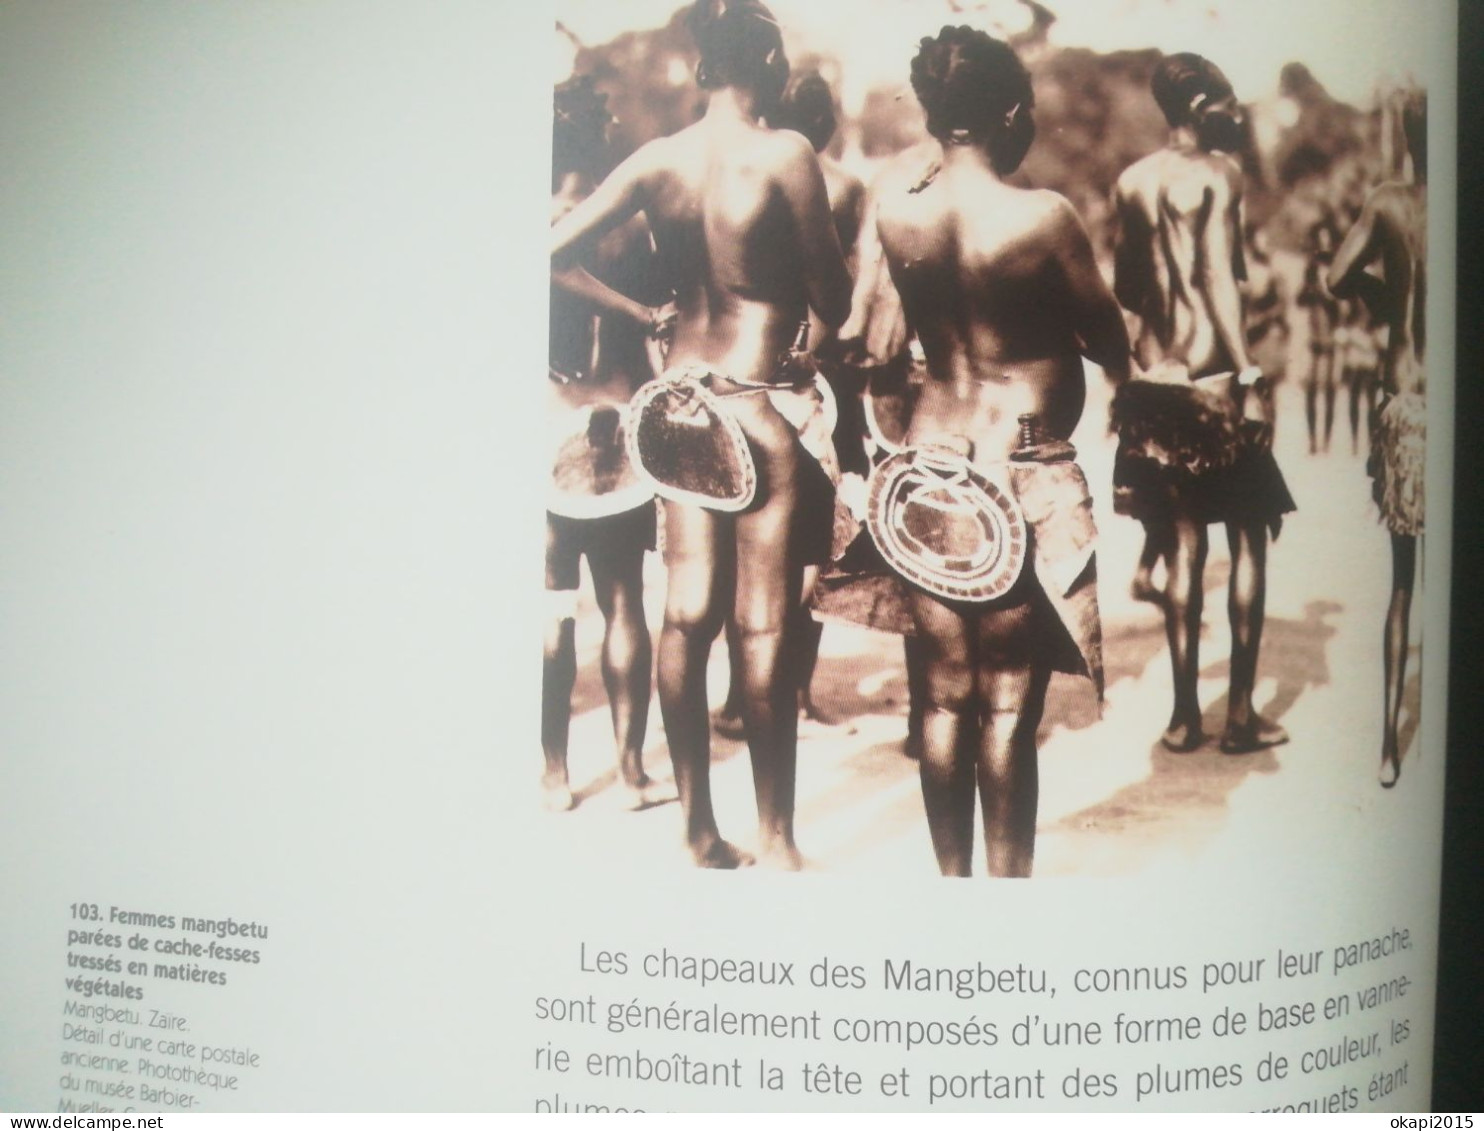 ART AFRICAIN LIVRE OBJETS AFRICAINS DU QUOTIDIEN SCEPTRE ARMES BIJOUX TABOURET CUILLER RITES  CONGO ZAÏRE KUBA  KASAÏ